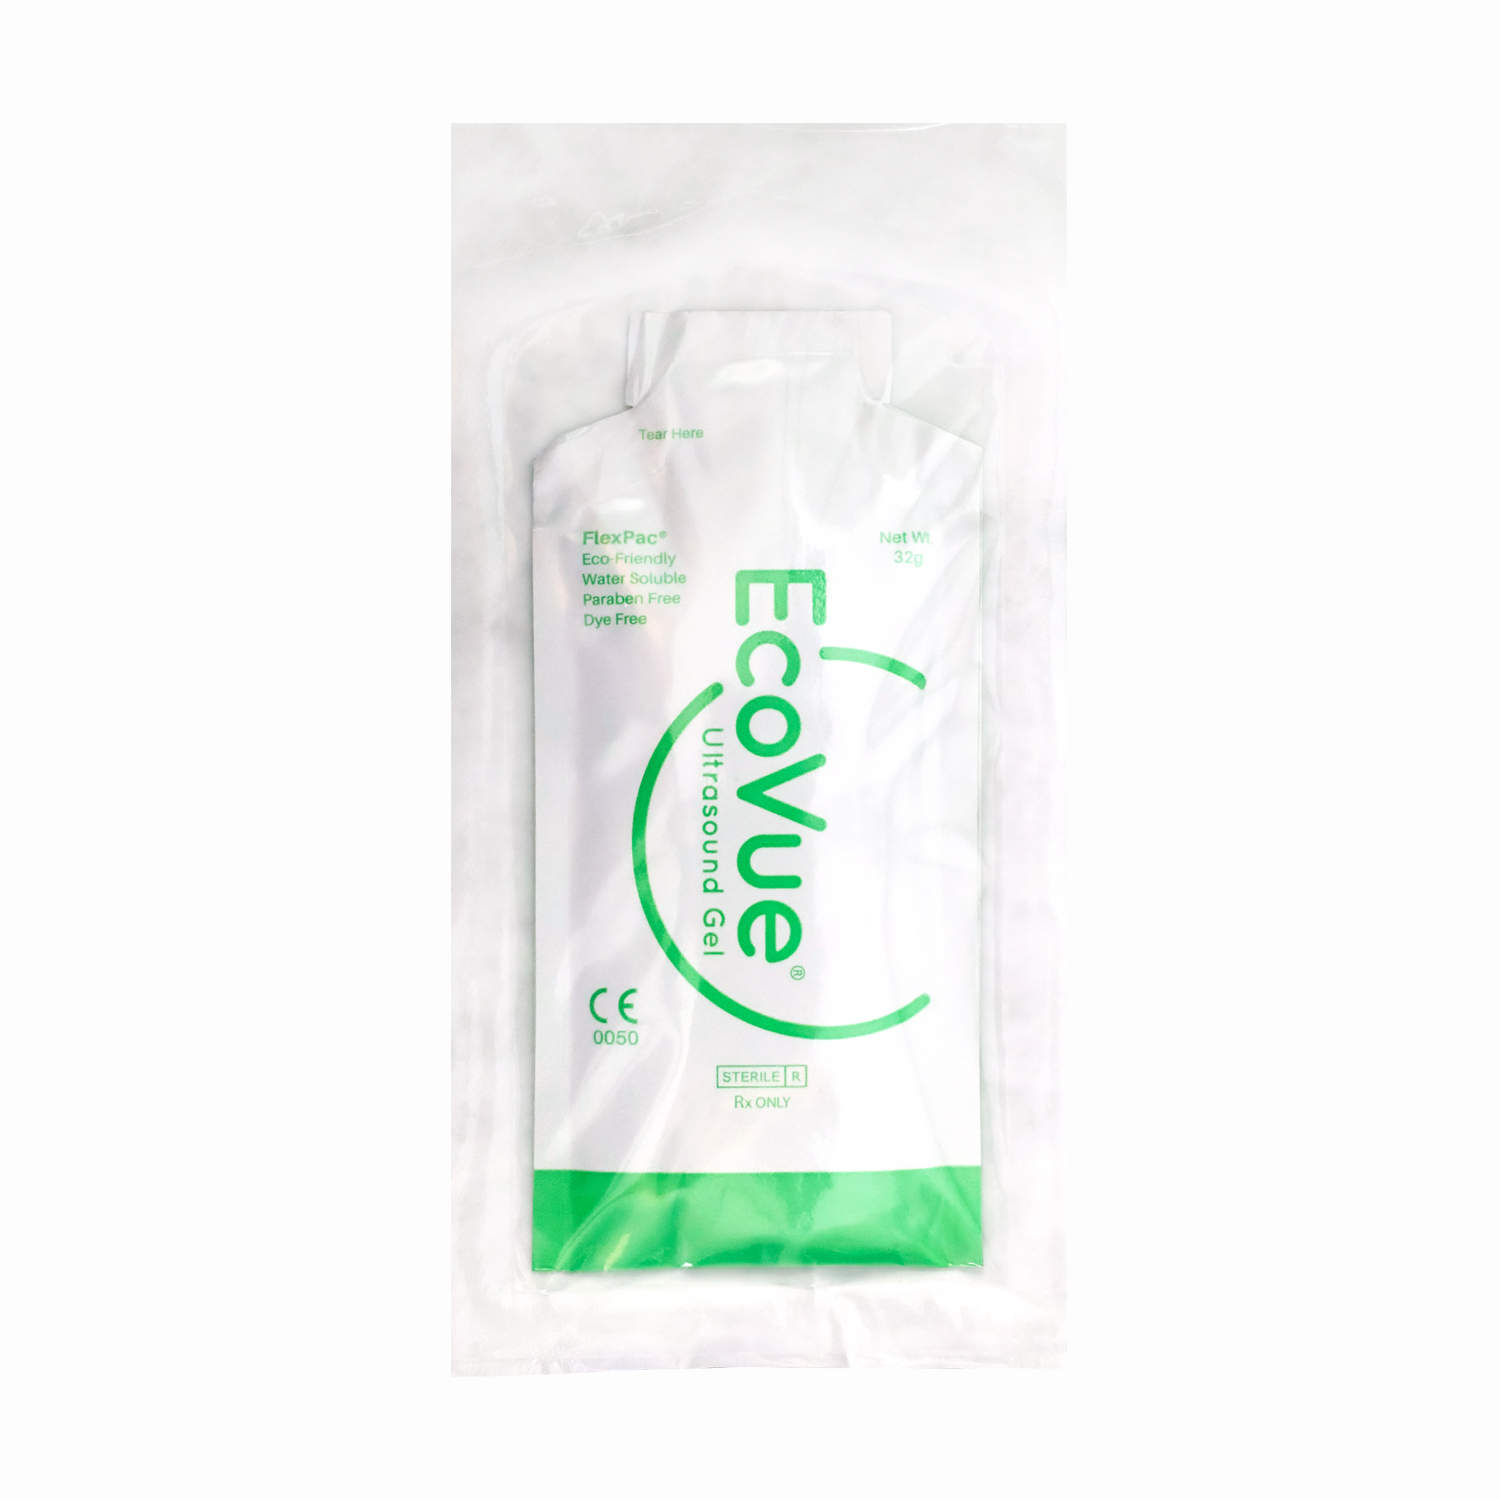 EcoVue-282-32g-FlexPac-sterile-overwrap.jpg